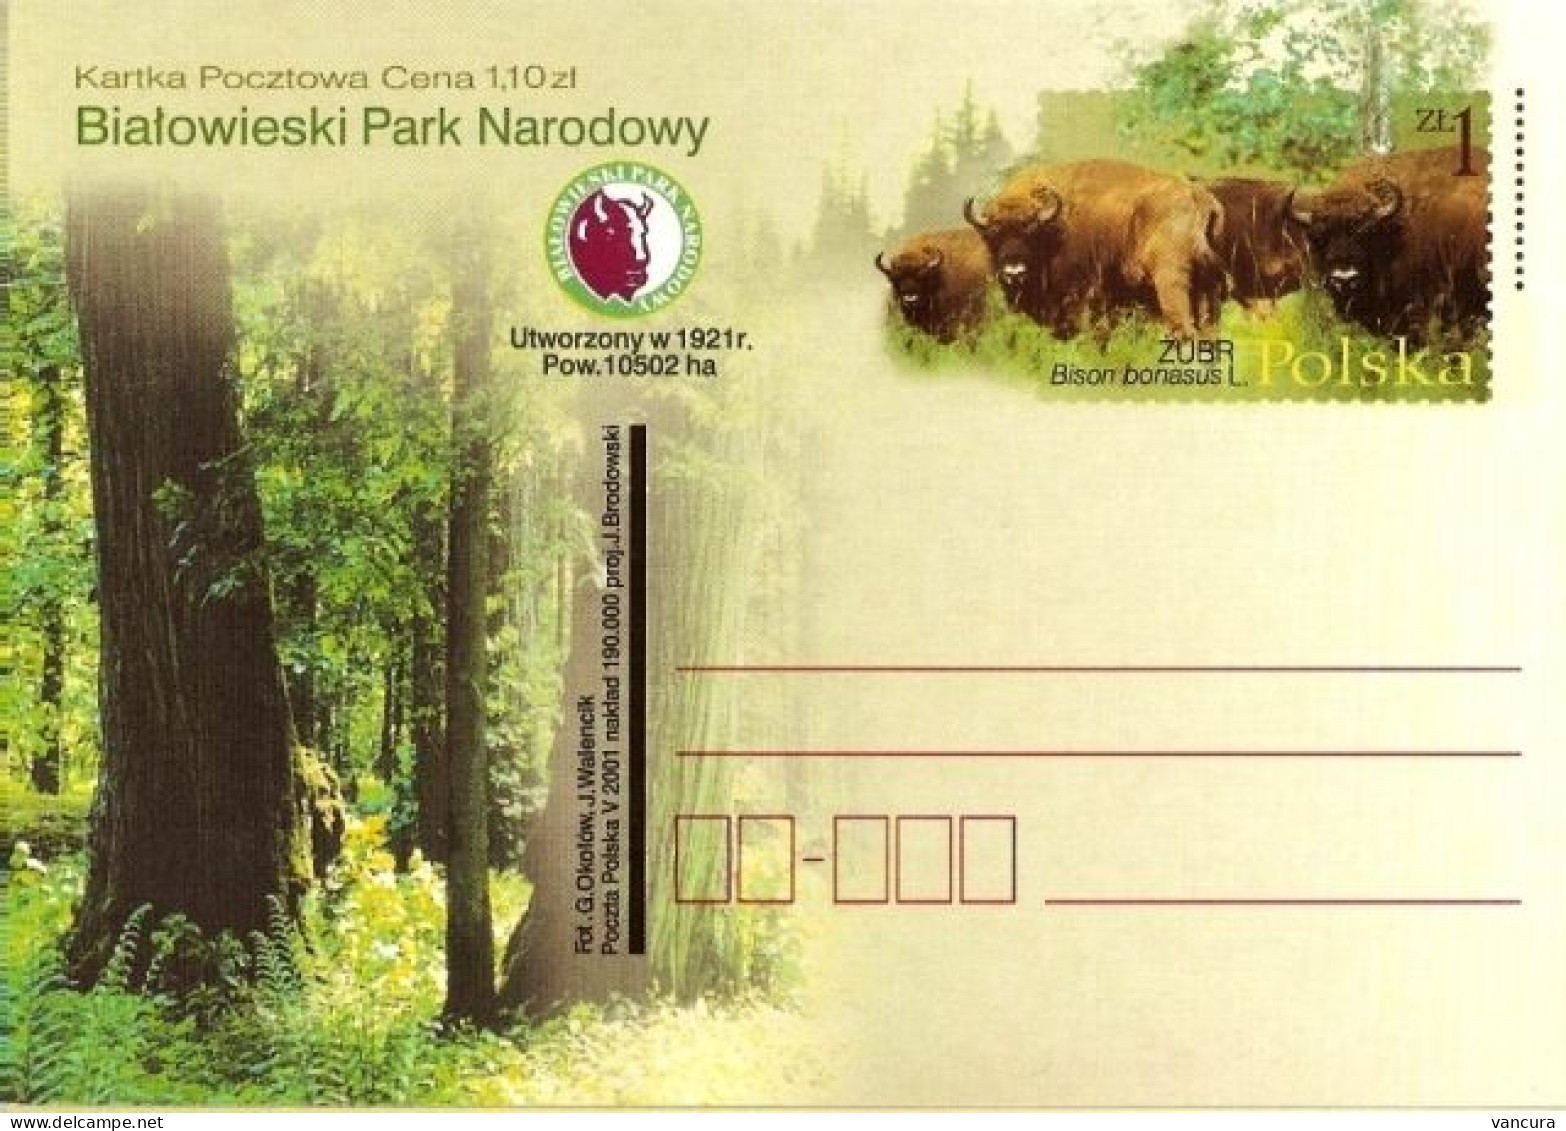 Cp 1260 Poland Bialowieski Park Narodowy Bison Bonasus L. 2001 - Koeien